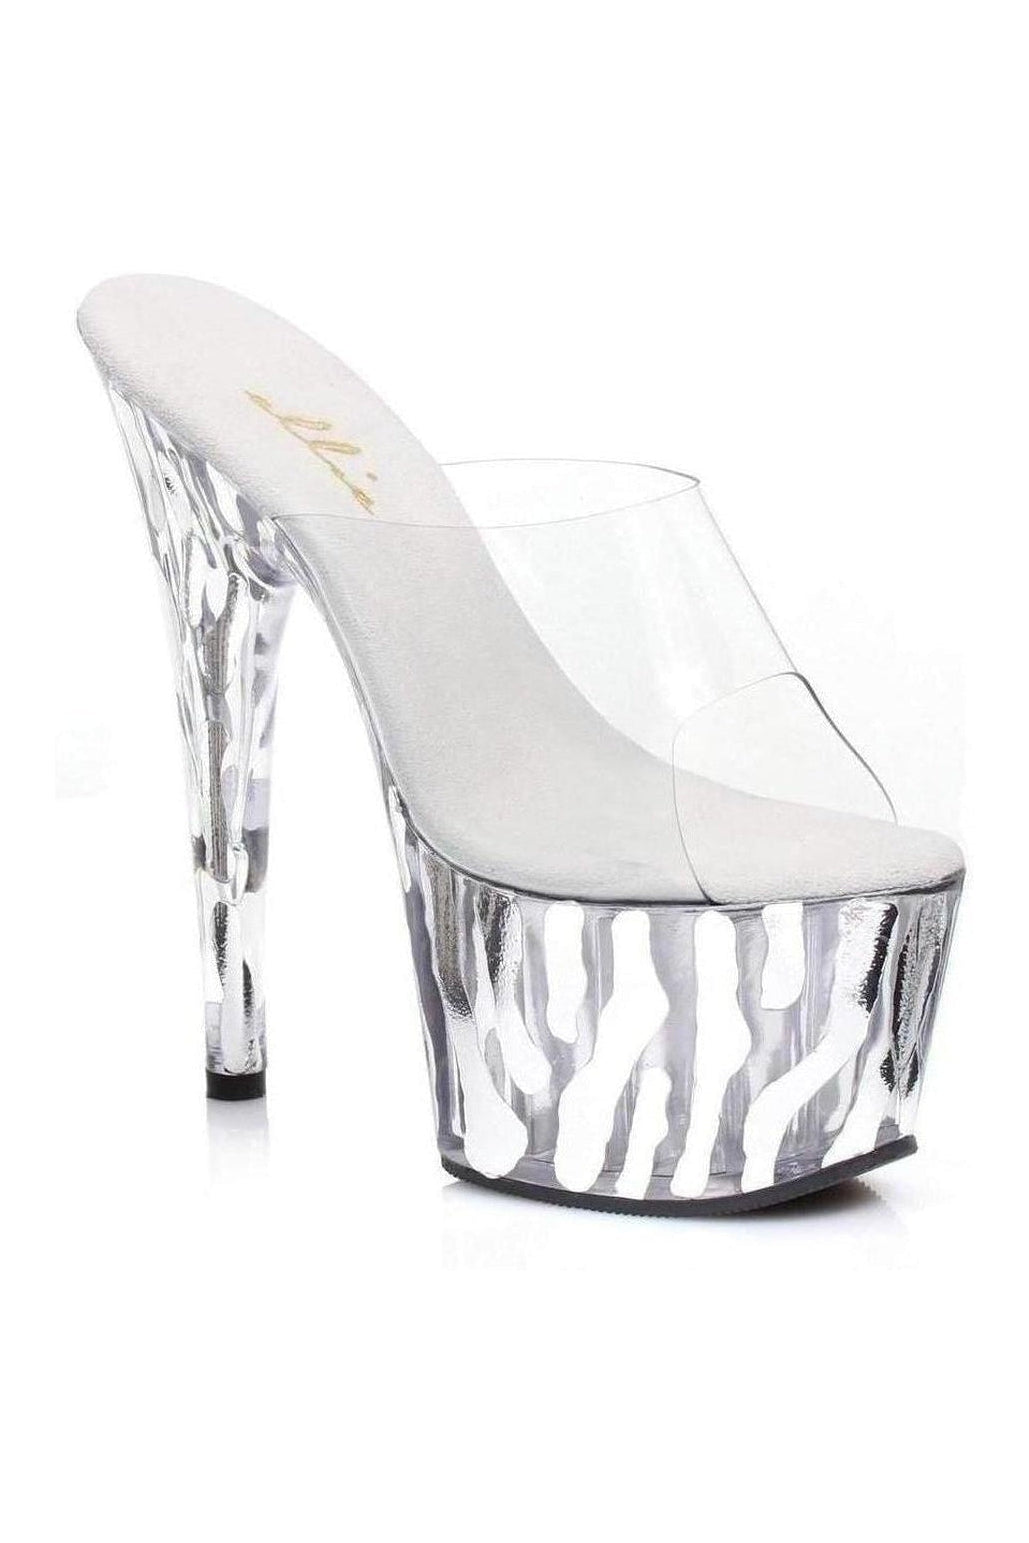 709-RUGGED Platform Slide | White Patent-Ellie Shoes-SEXYSHOES.COM